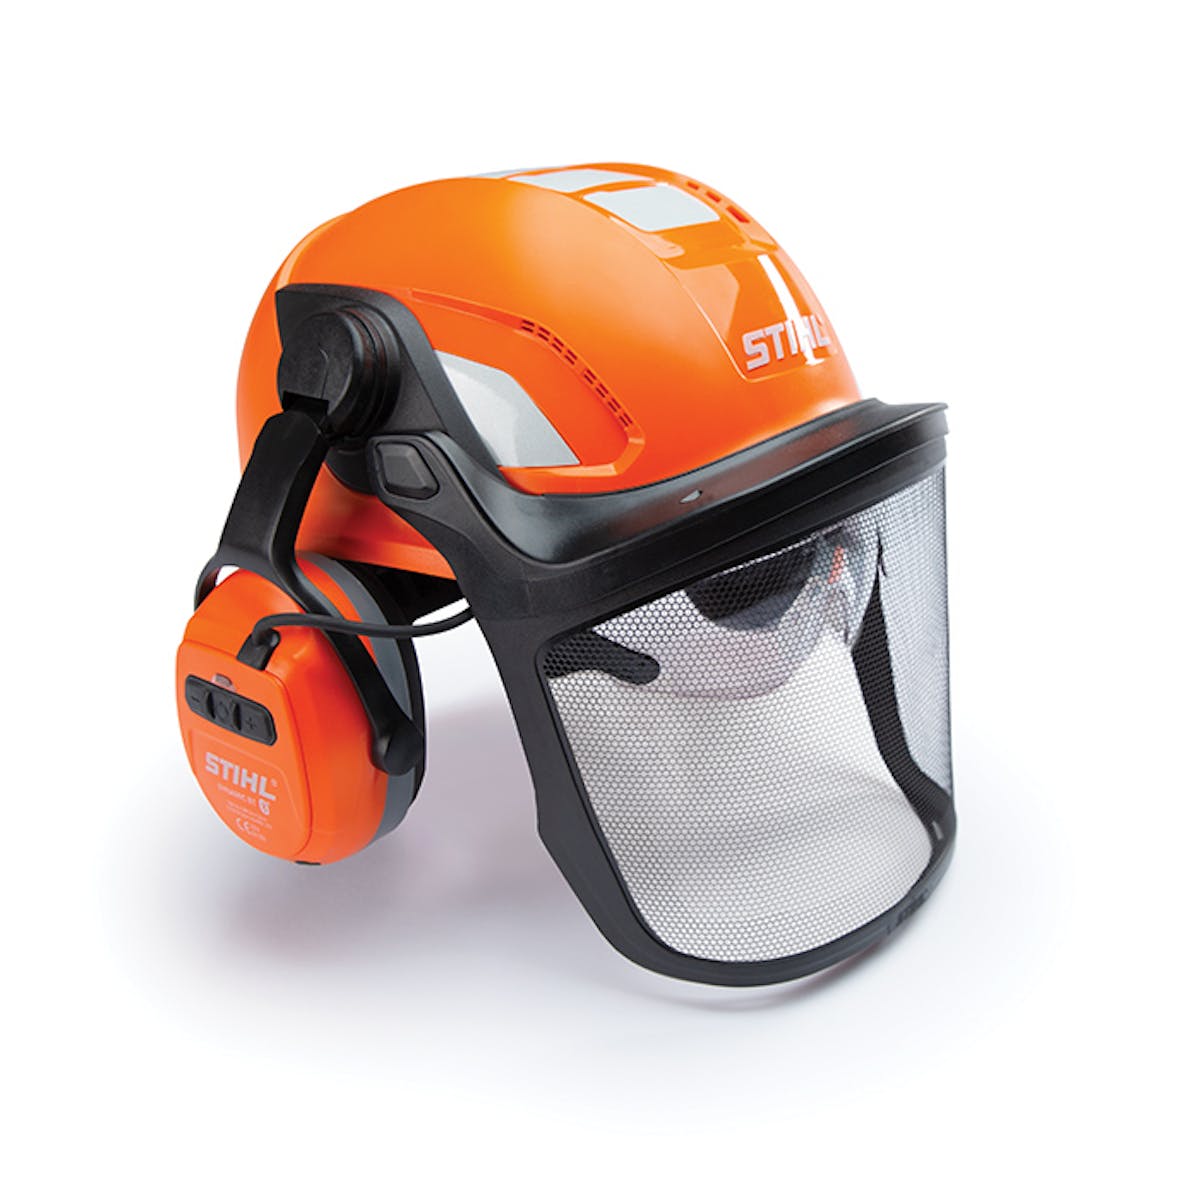 ADVANCE X-VENT Bluetooth Helmet System